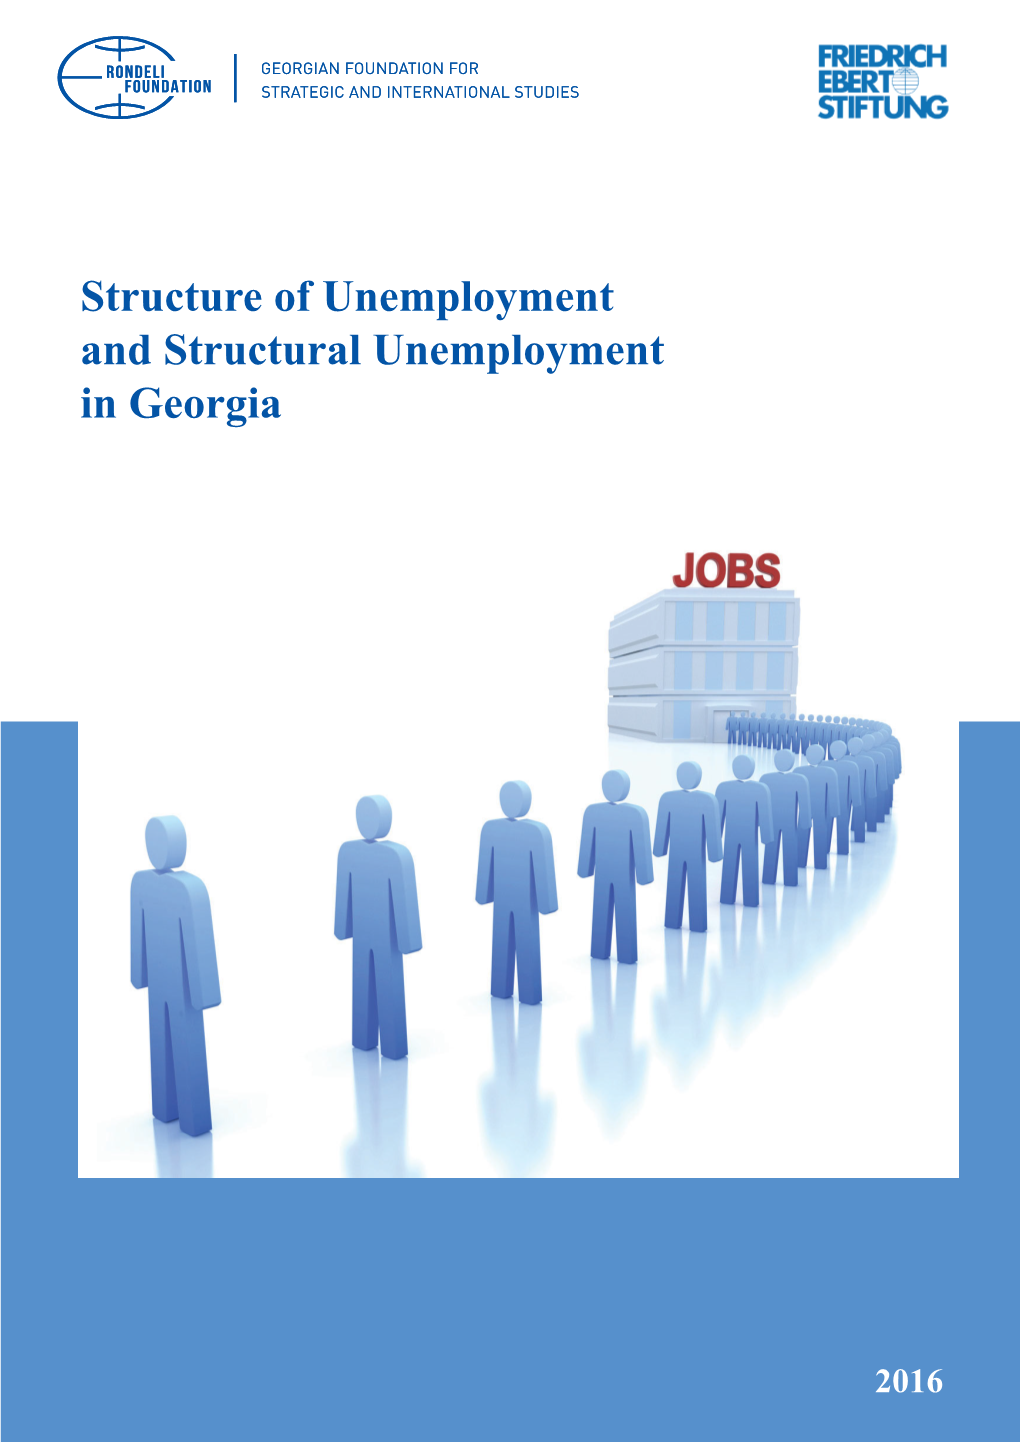 4. Structural Unemployment